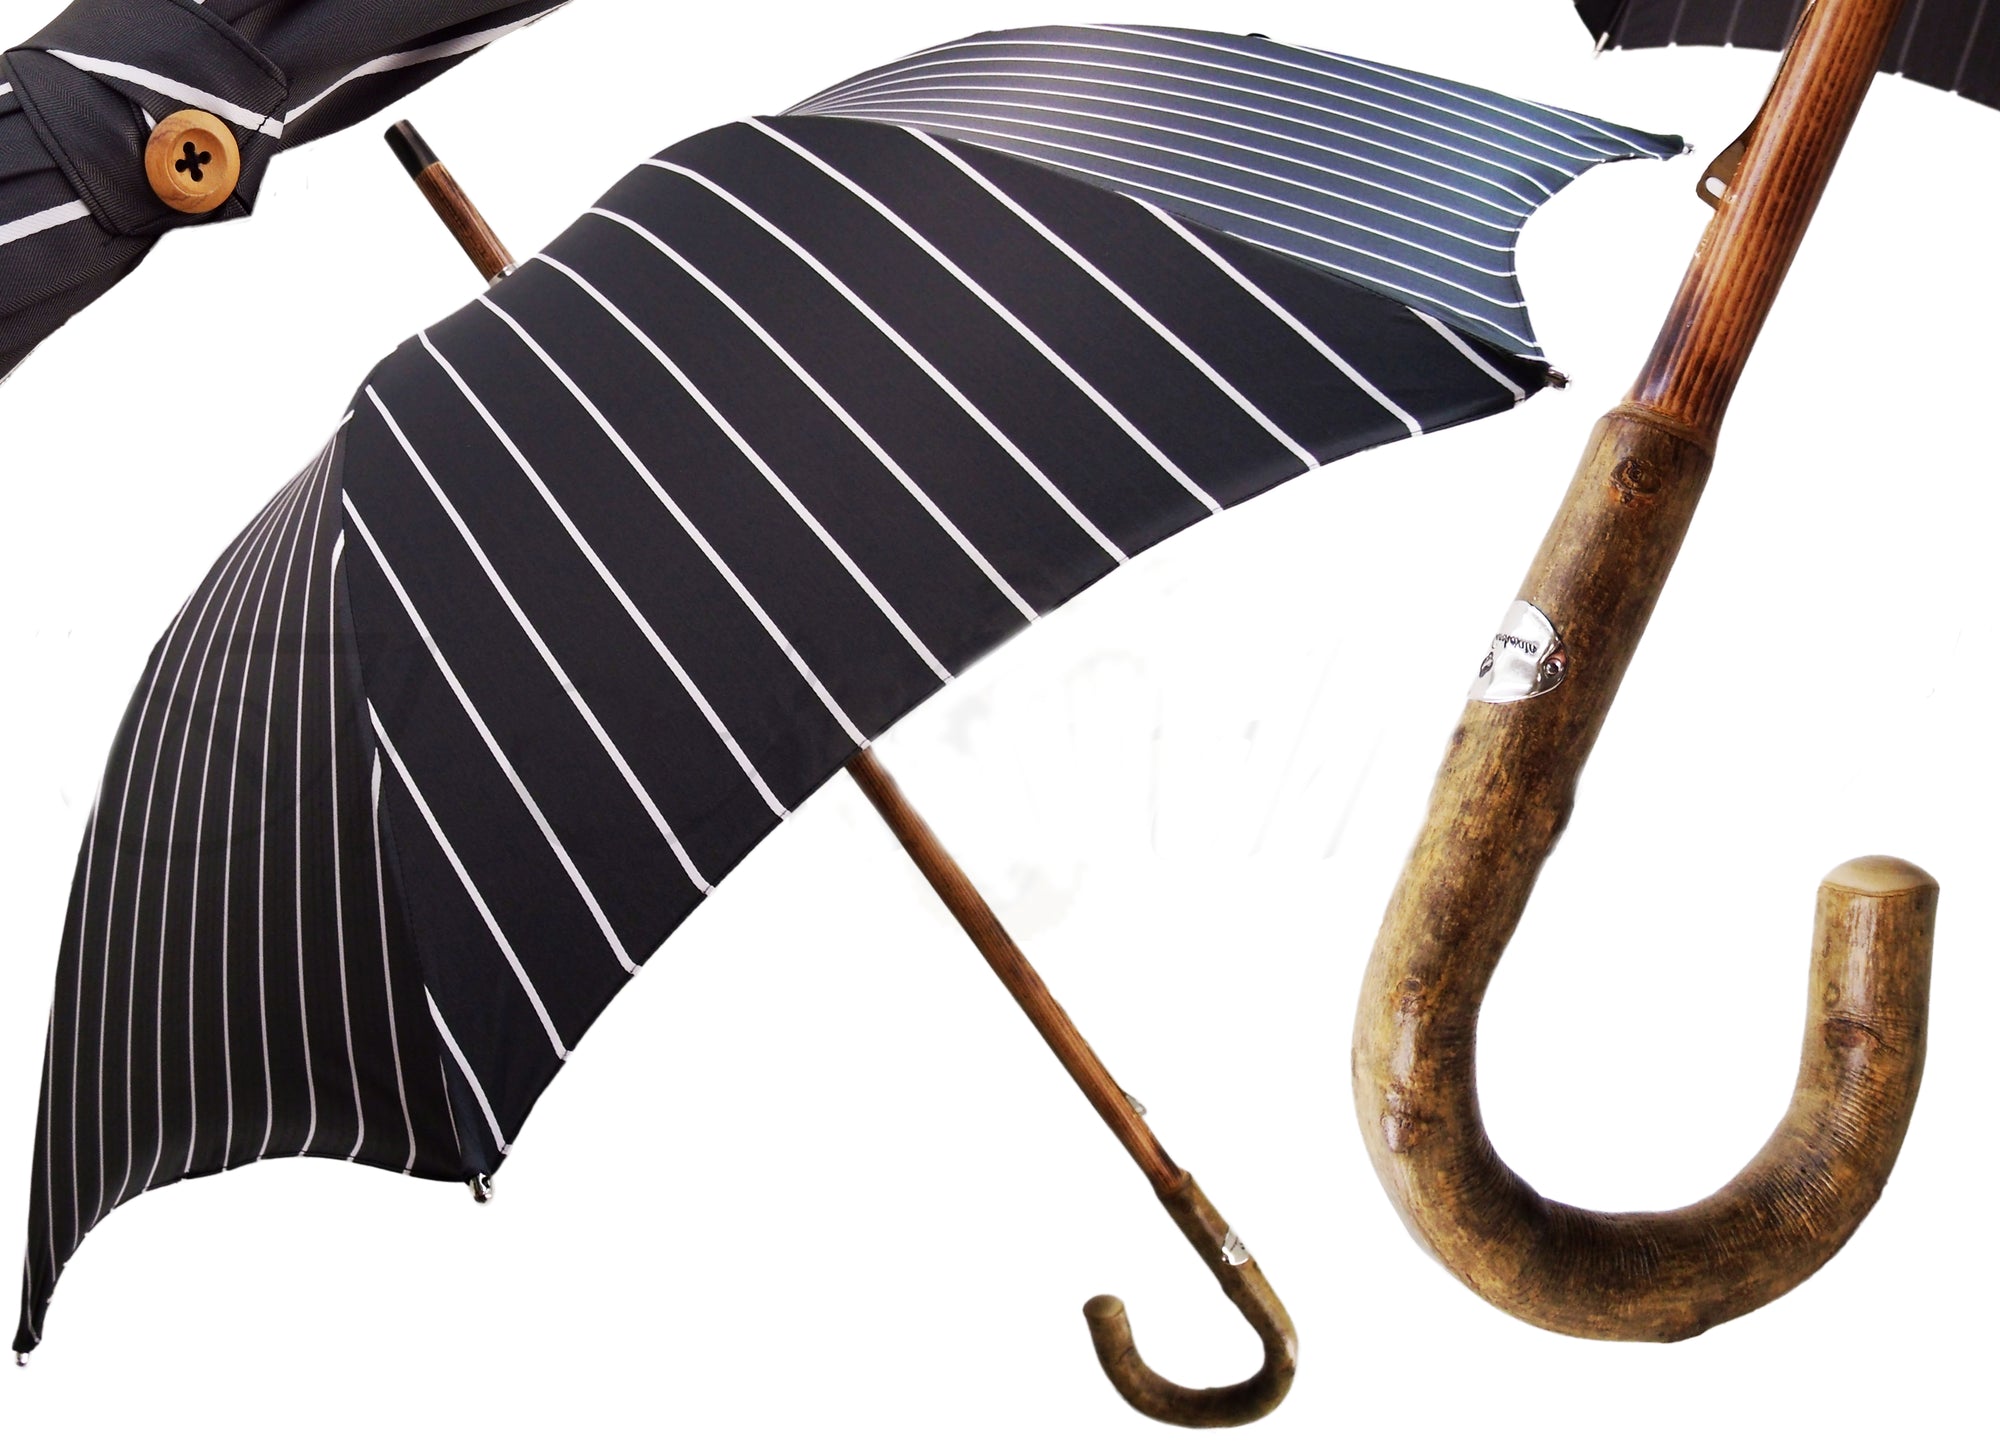 Black & White Striped Classic Umbrella with Ash Wood Handle